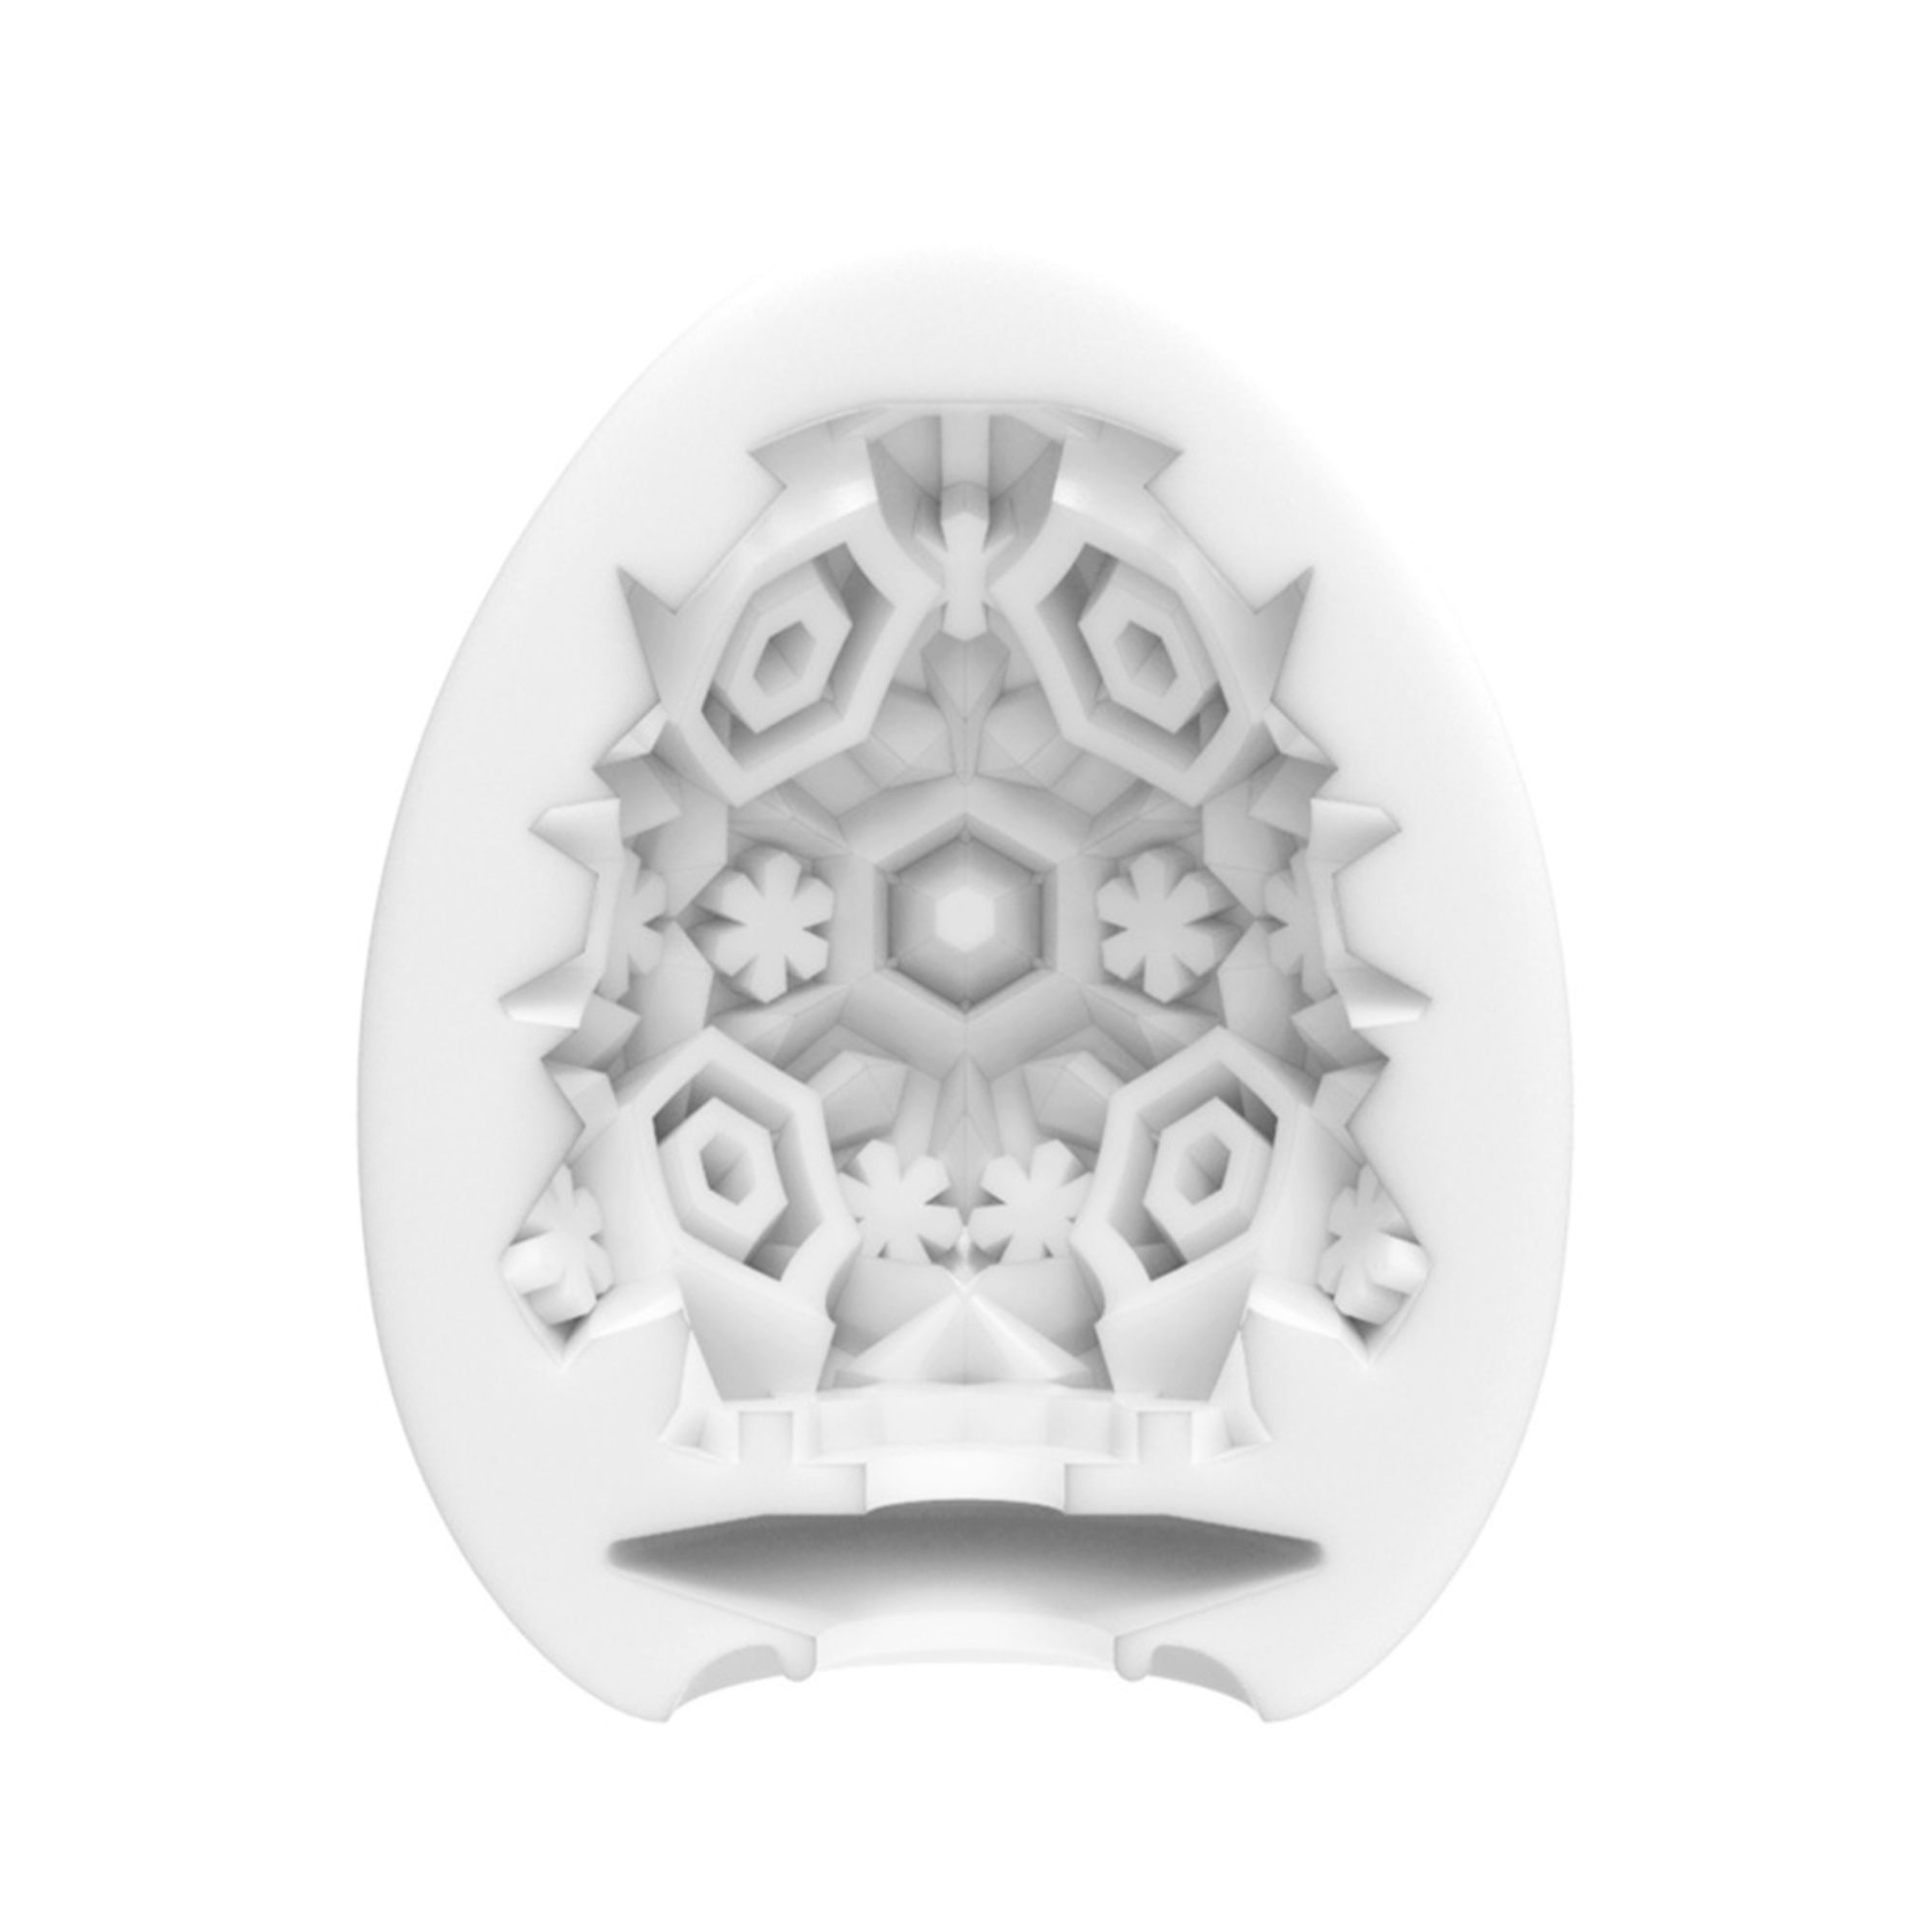 TENGA Egg Crystal Snow Masturbator